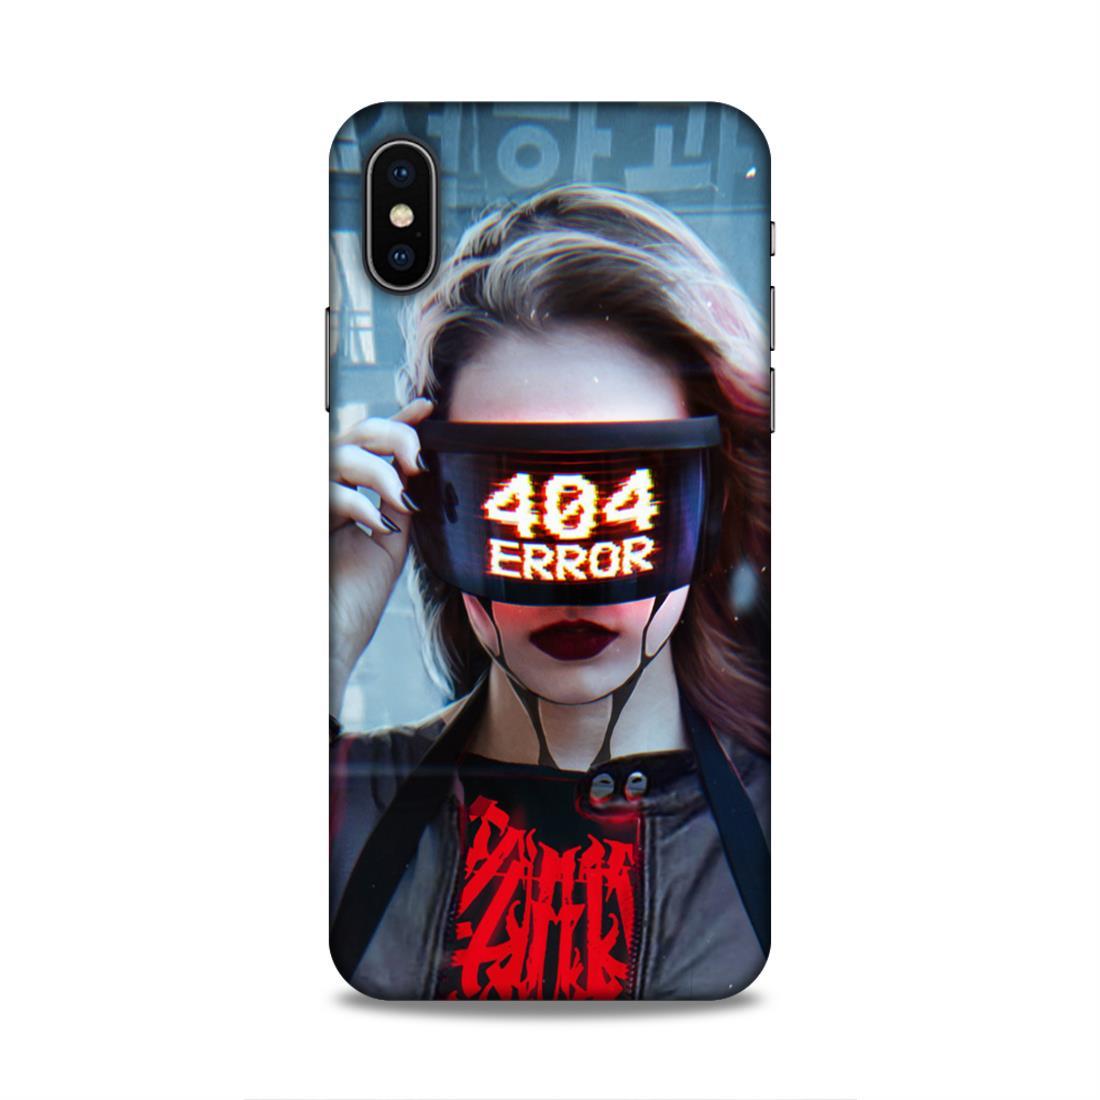 404 Error iPhone X Phone Cover